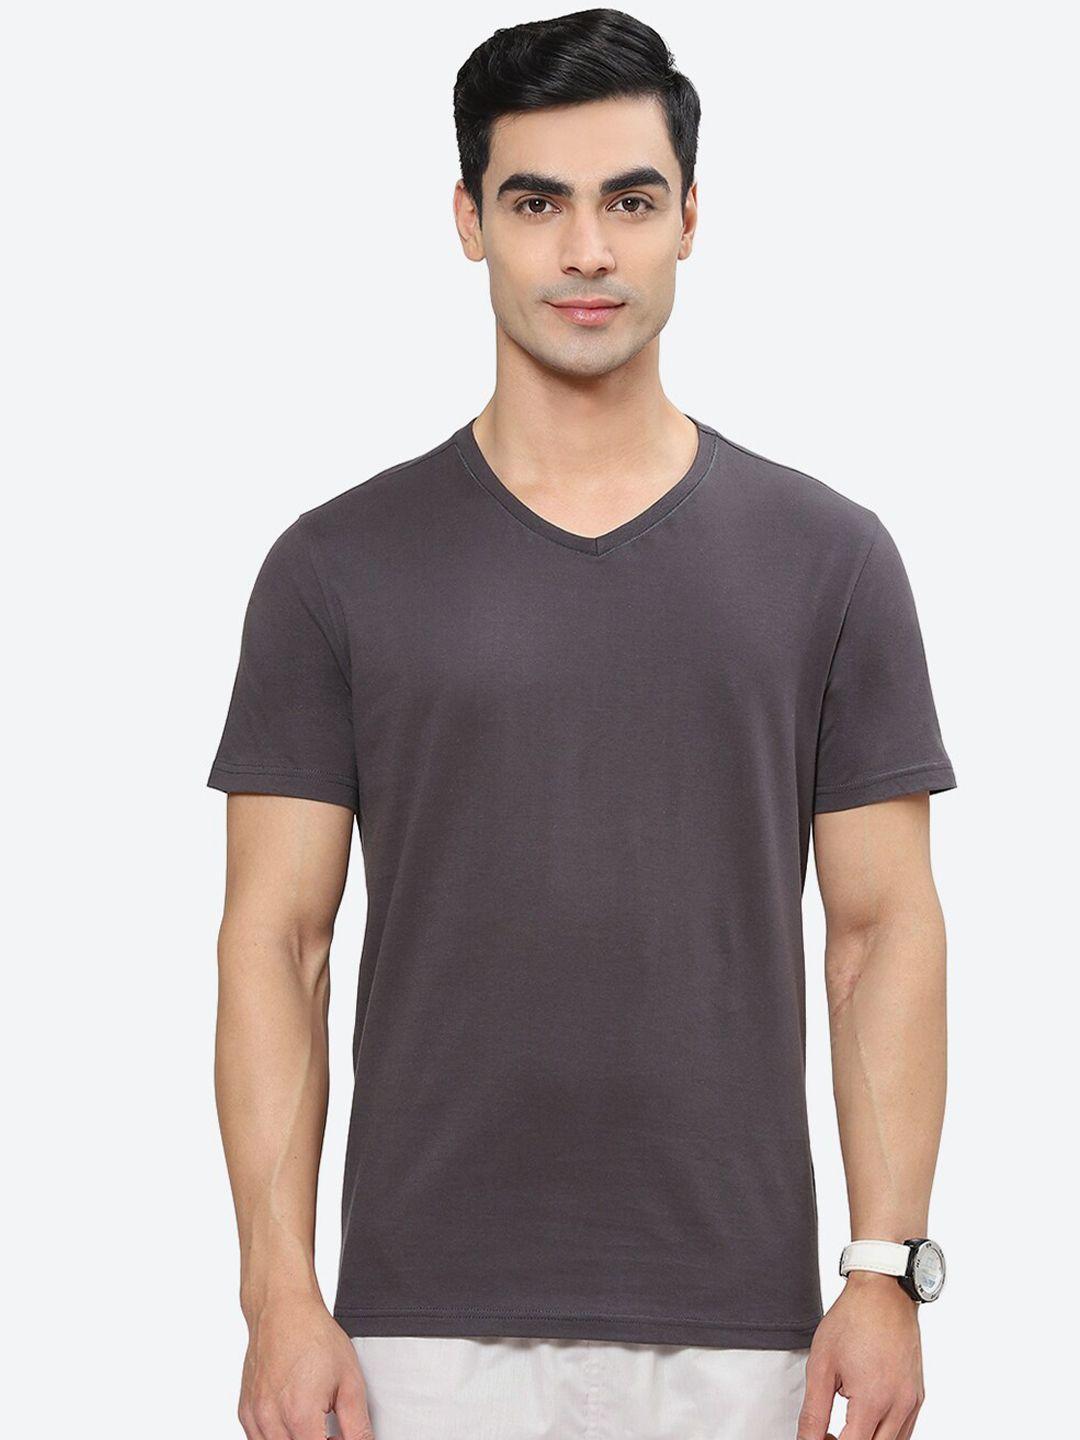 2bme v-neck short sleeve pure cotton regular t-shirt